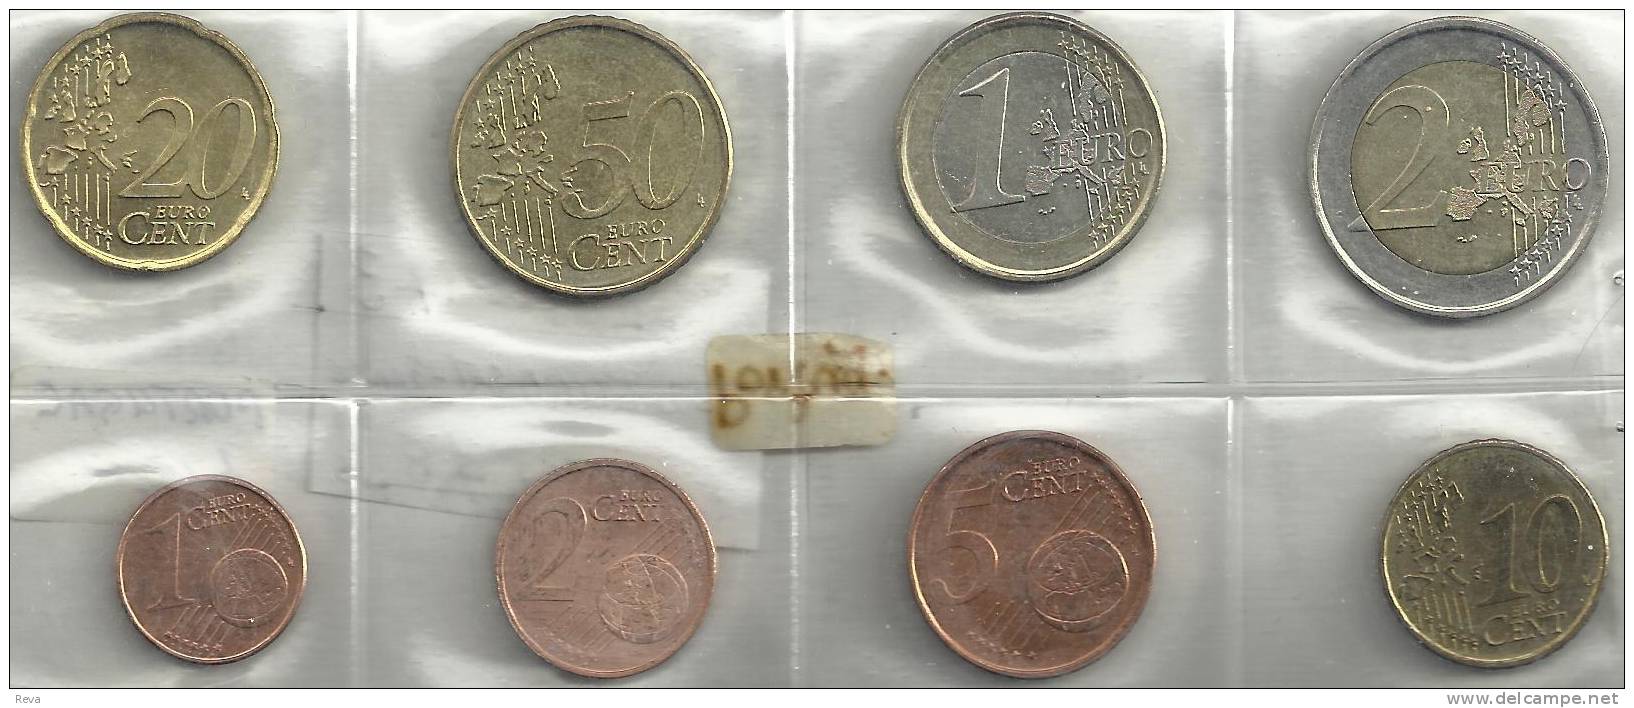 SPAIN SET OF 8 EURO COINS MOTIF FRONT STANDART BACK 1999-2000 UNC READ DESCRIPTION CAREFULLY !!! - Münz- Und Jahressets